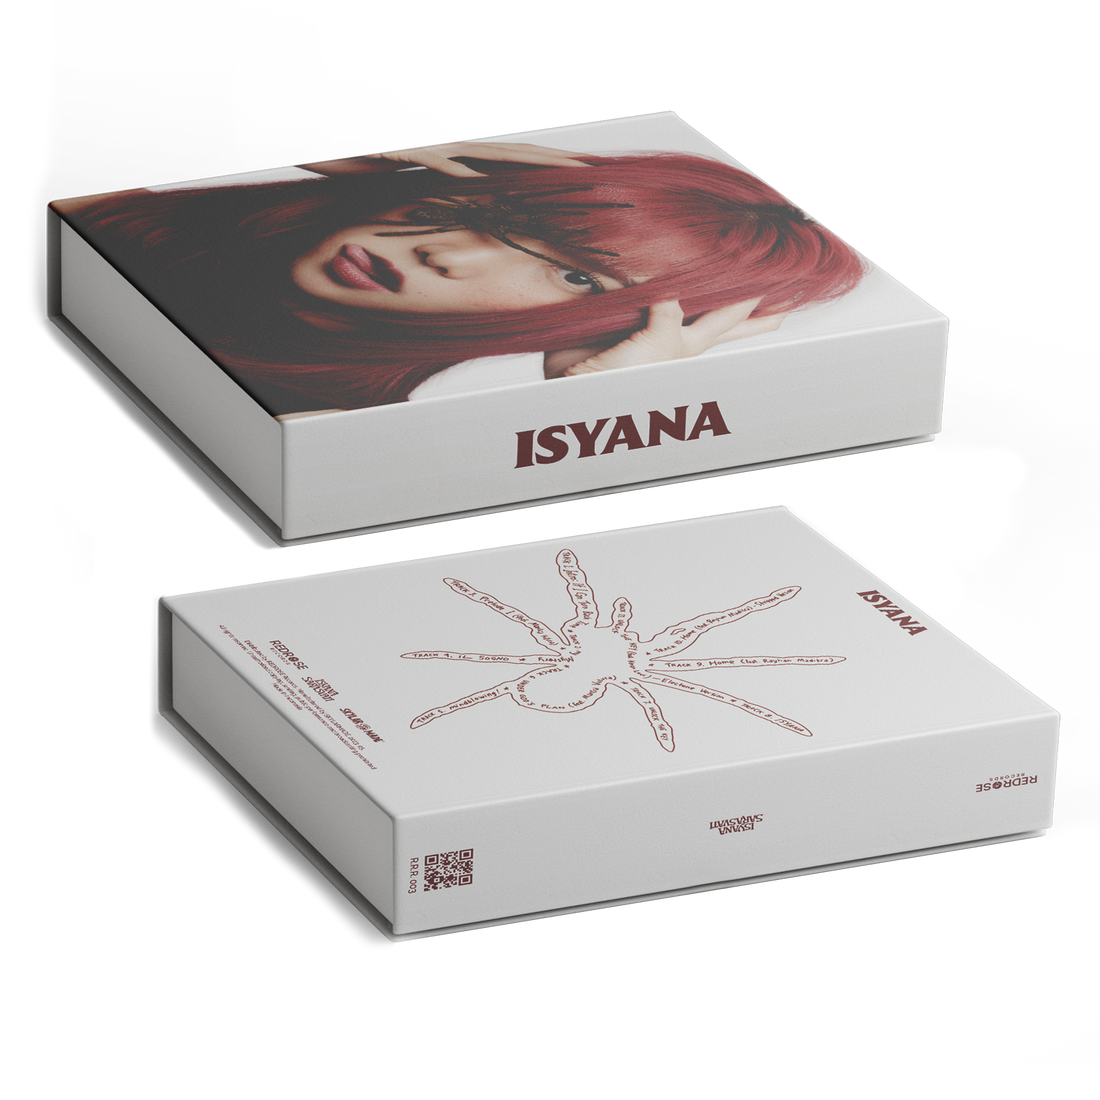 Exclusive Album Boxset Isyana Sarasvati - "ISYANA" White Ver.